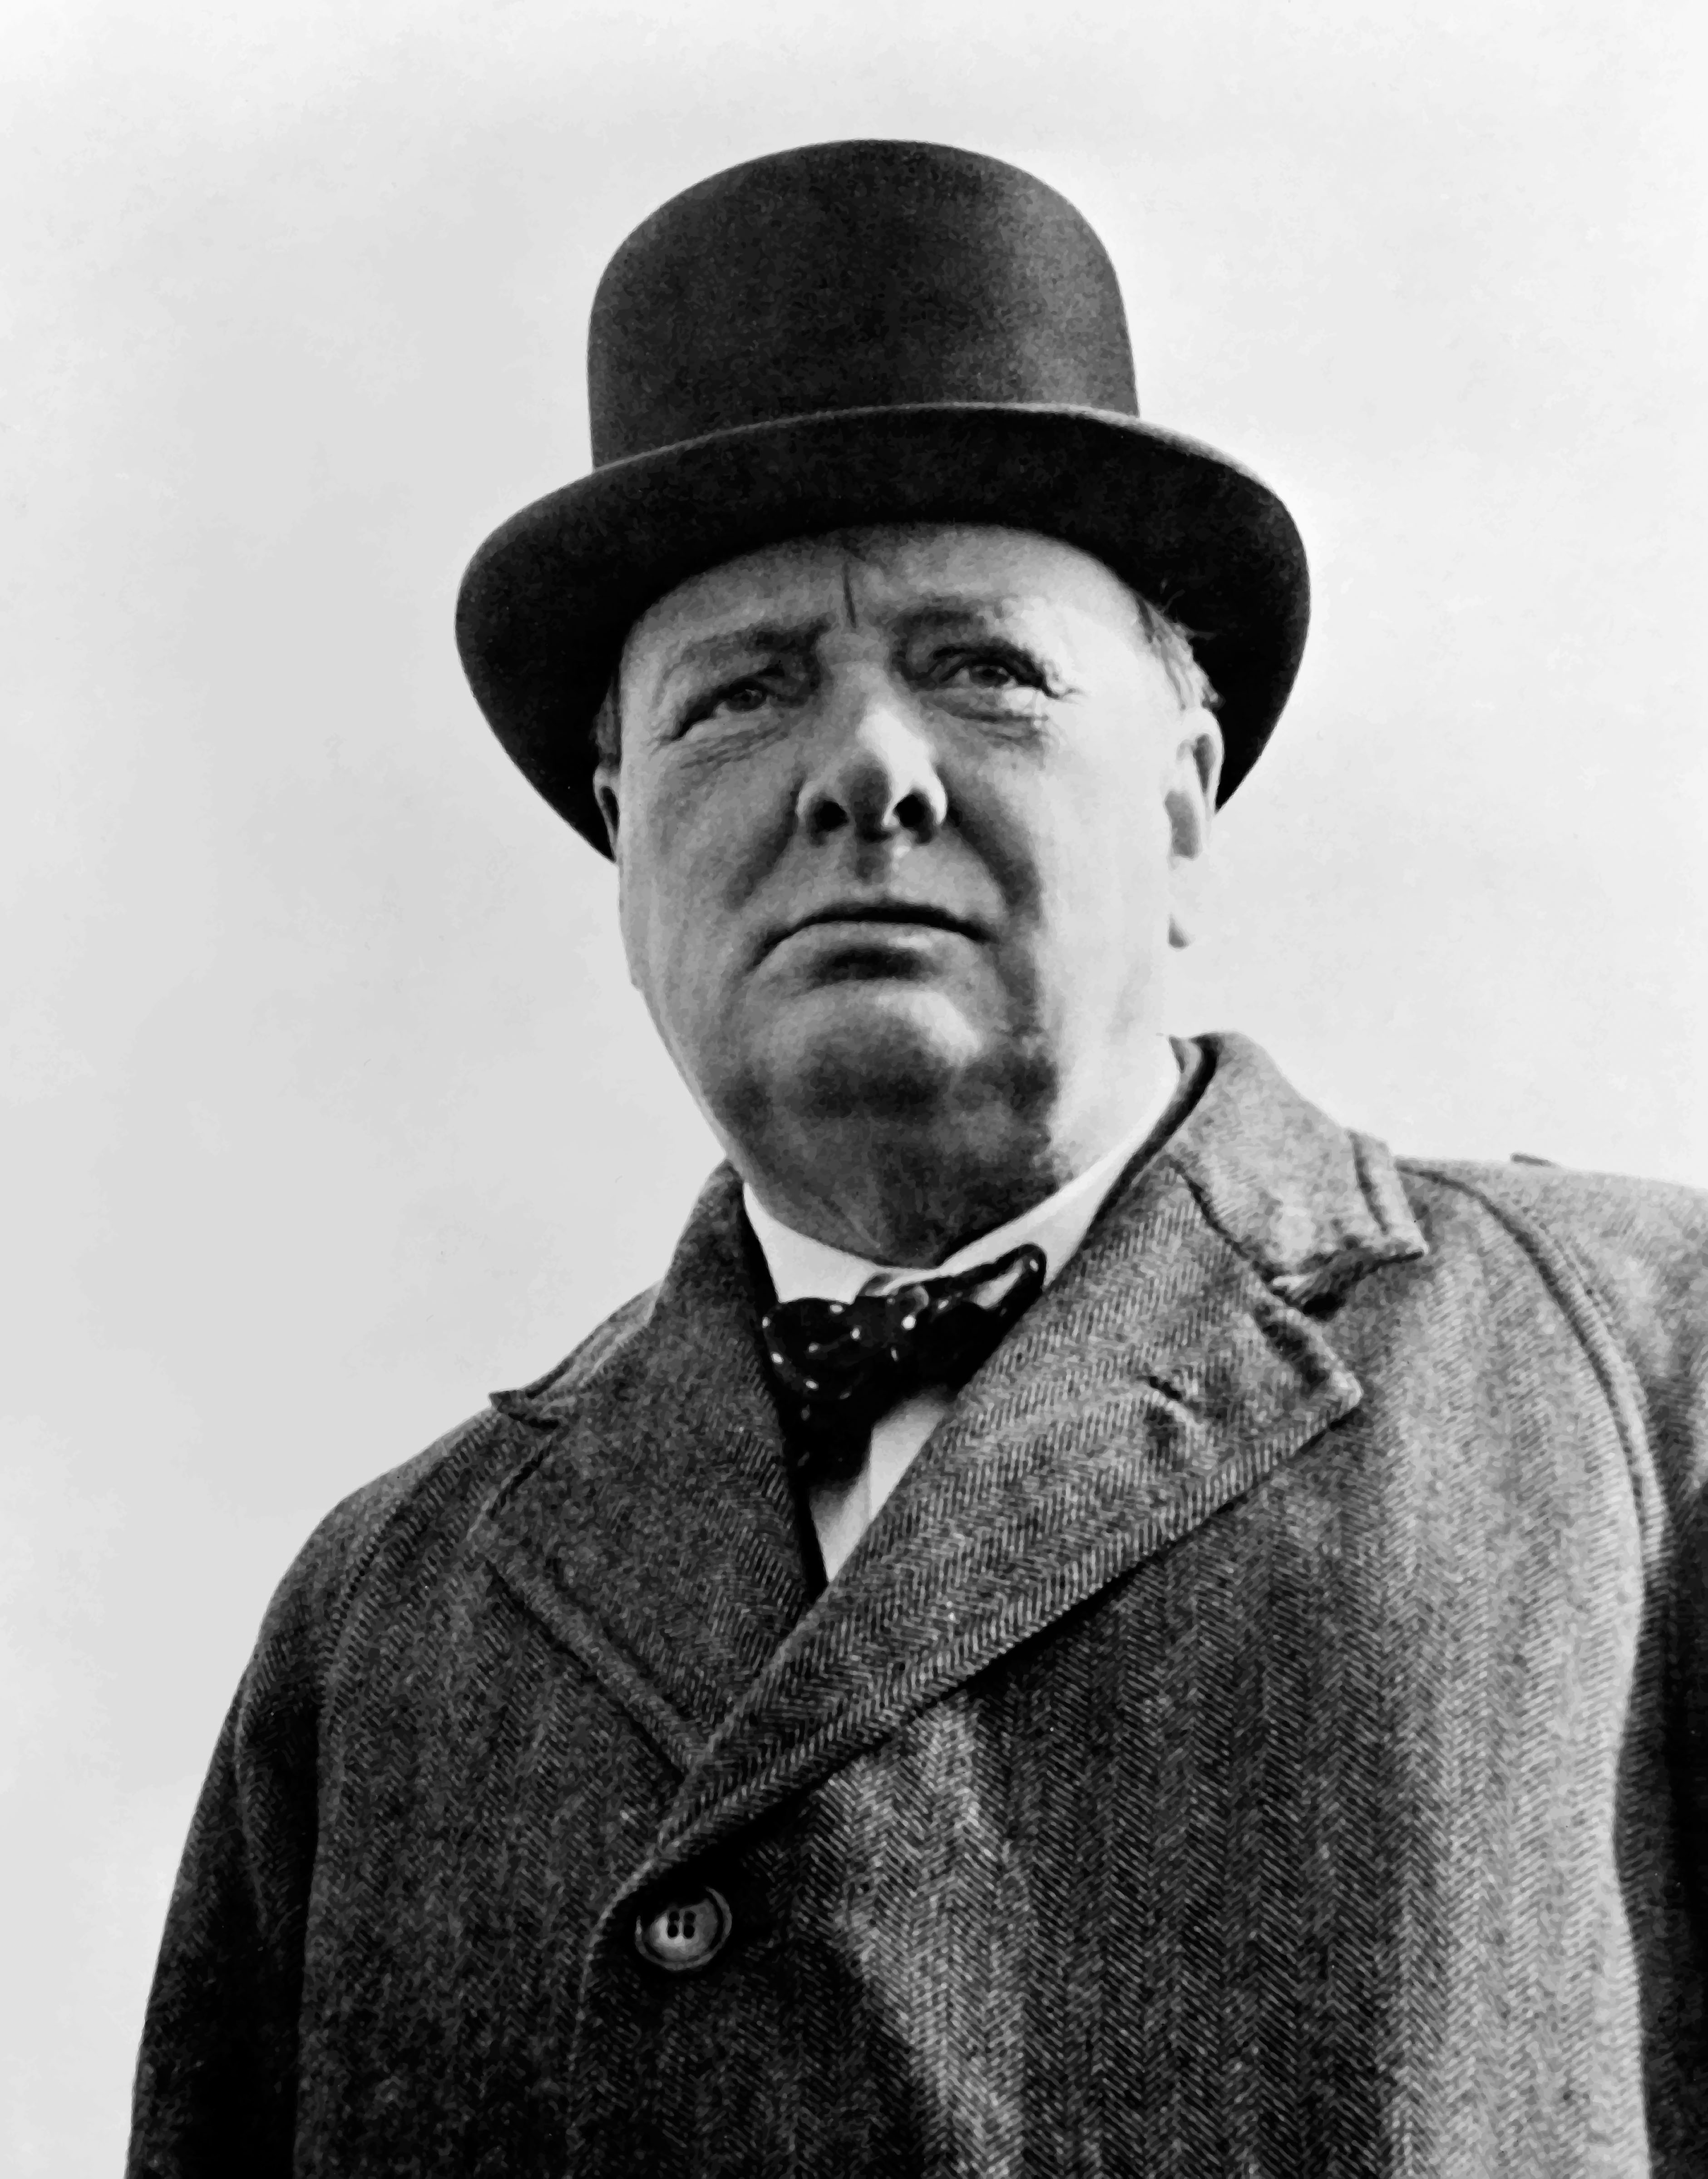 Sir Winston Churchill died on 24th January 1965